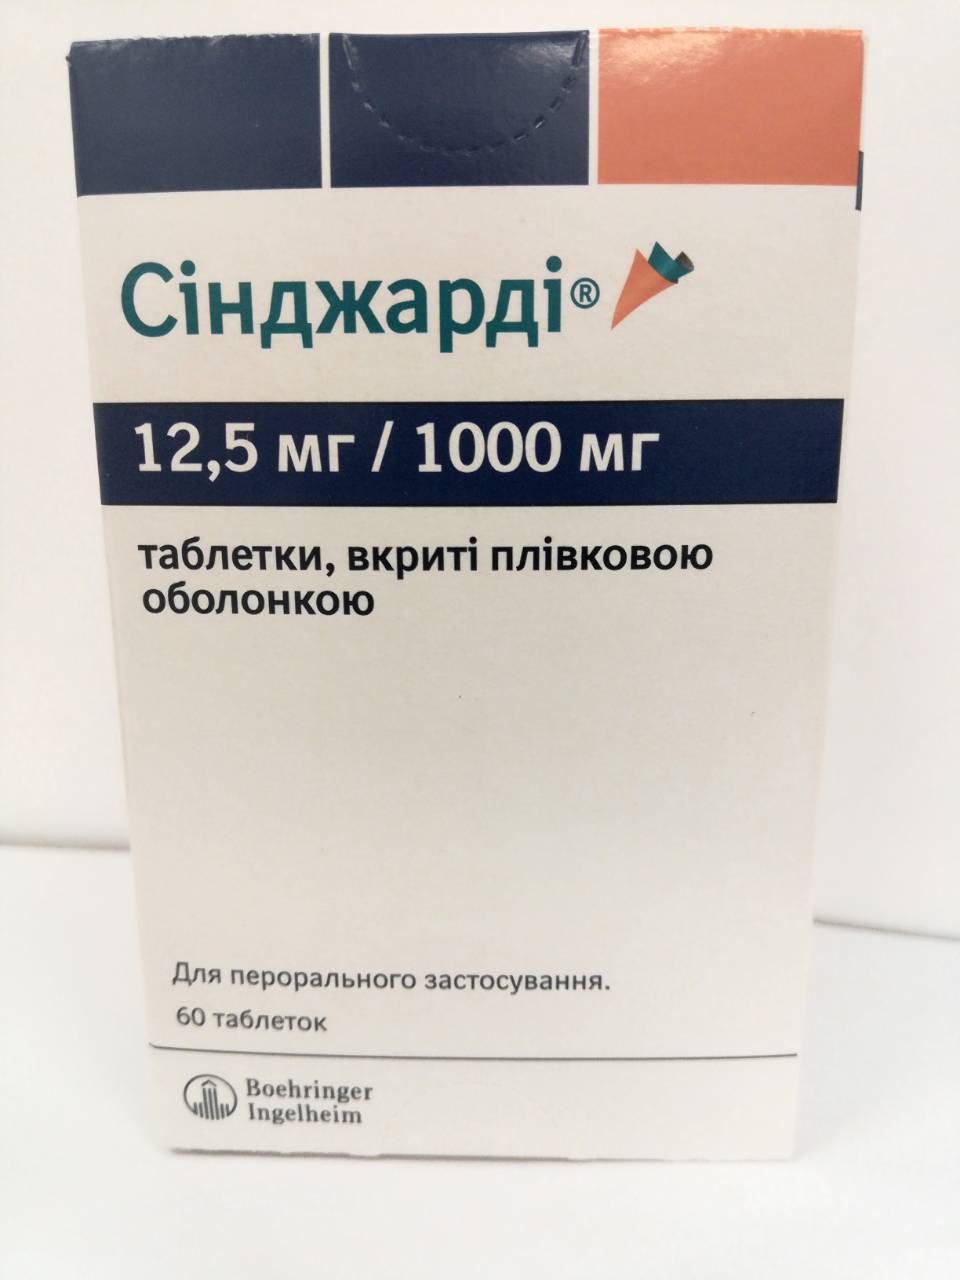 7116 КАЗАНО® - Metformin and alogliptin